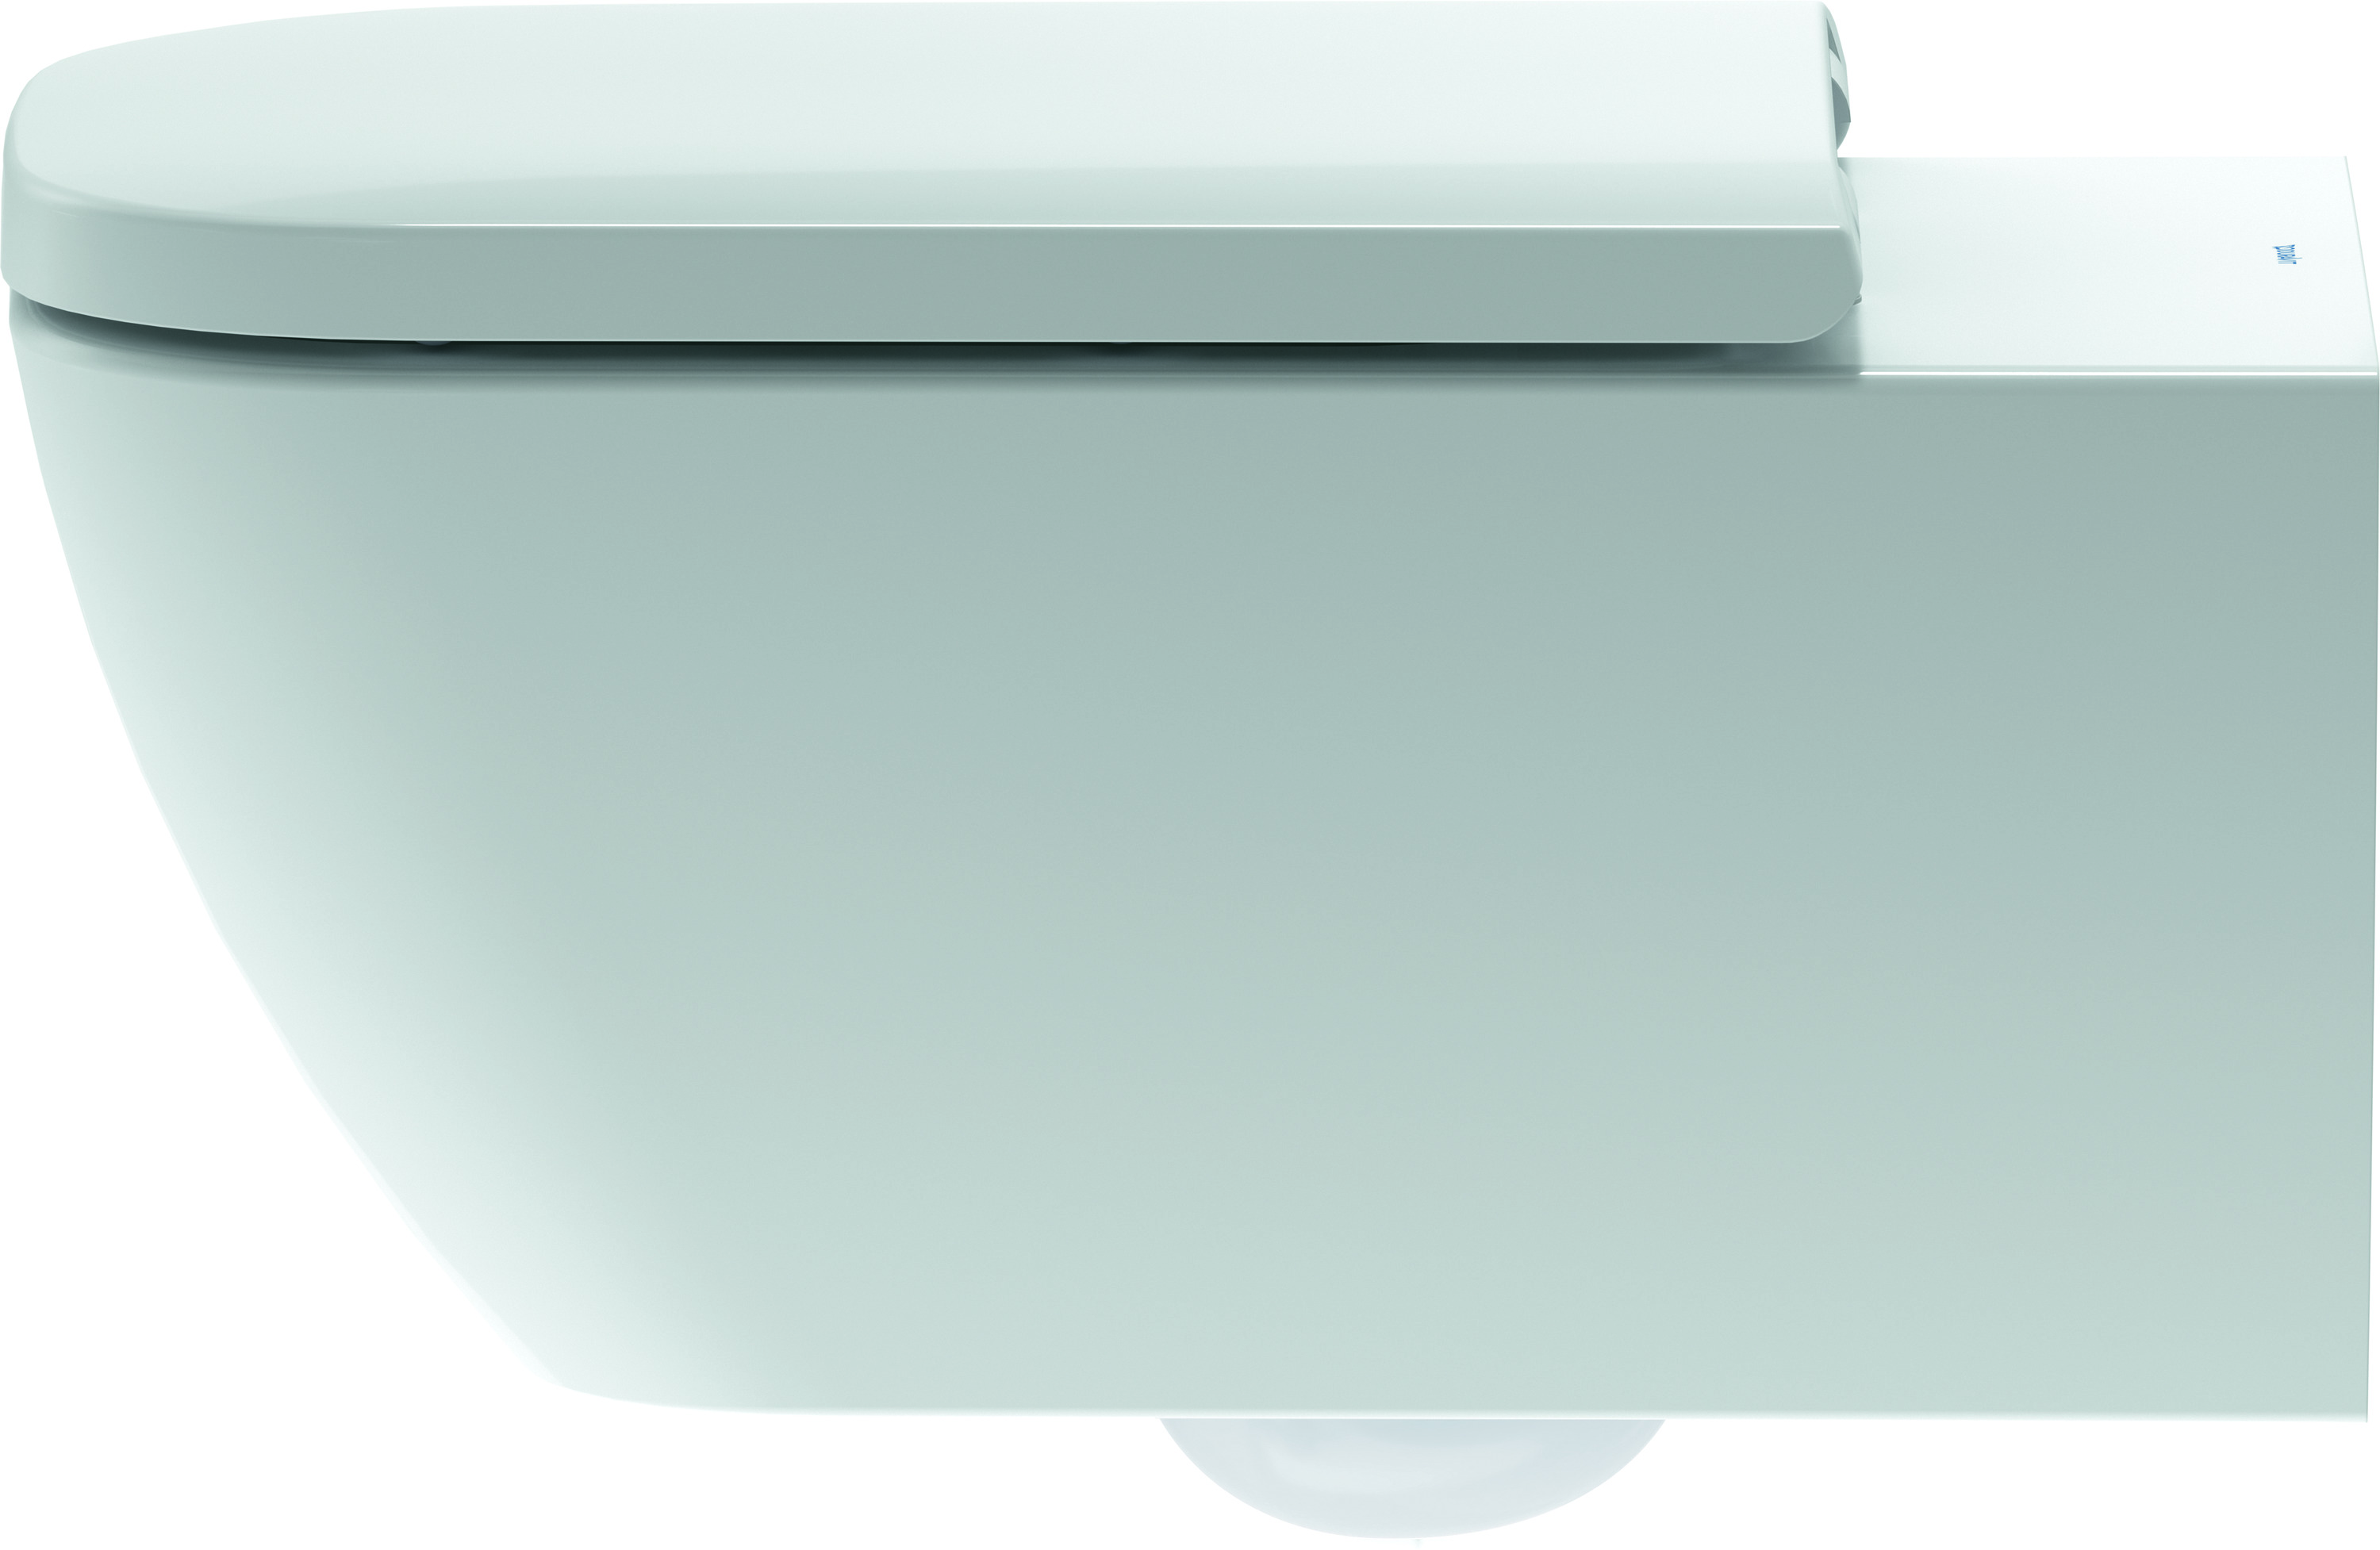 Wand-WC Happy D.2 620 mm Tiefspüler,rimless,Durafix,weiß,HYG